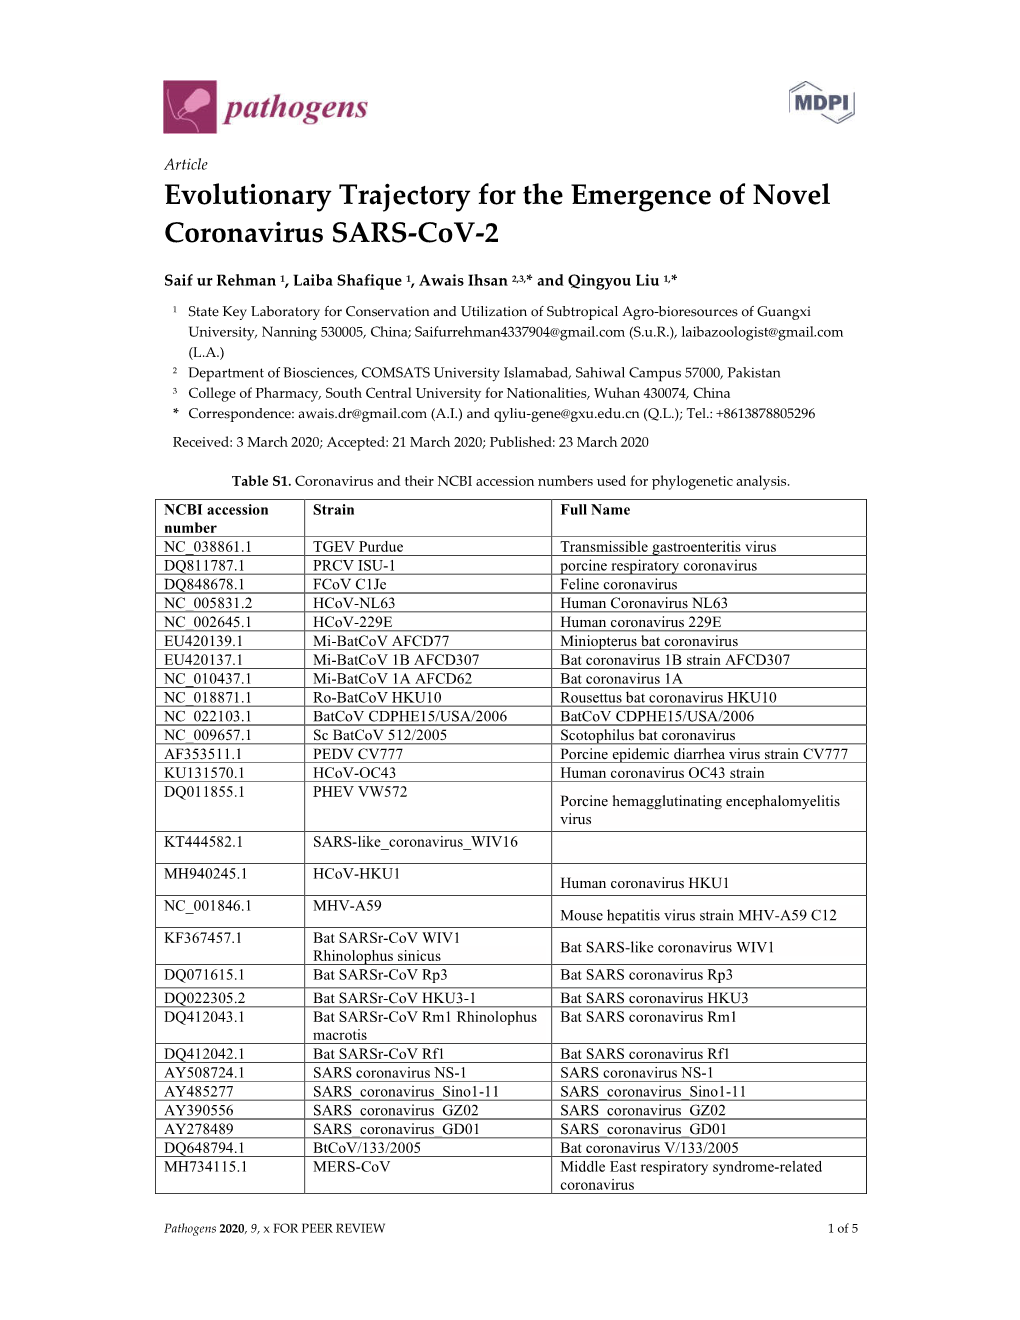 Evolutionary Trajectory for the Emergence of Novel Coronavirus SARS-Cov-2